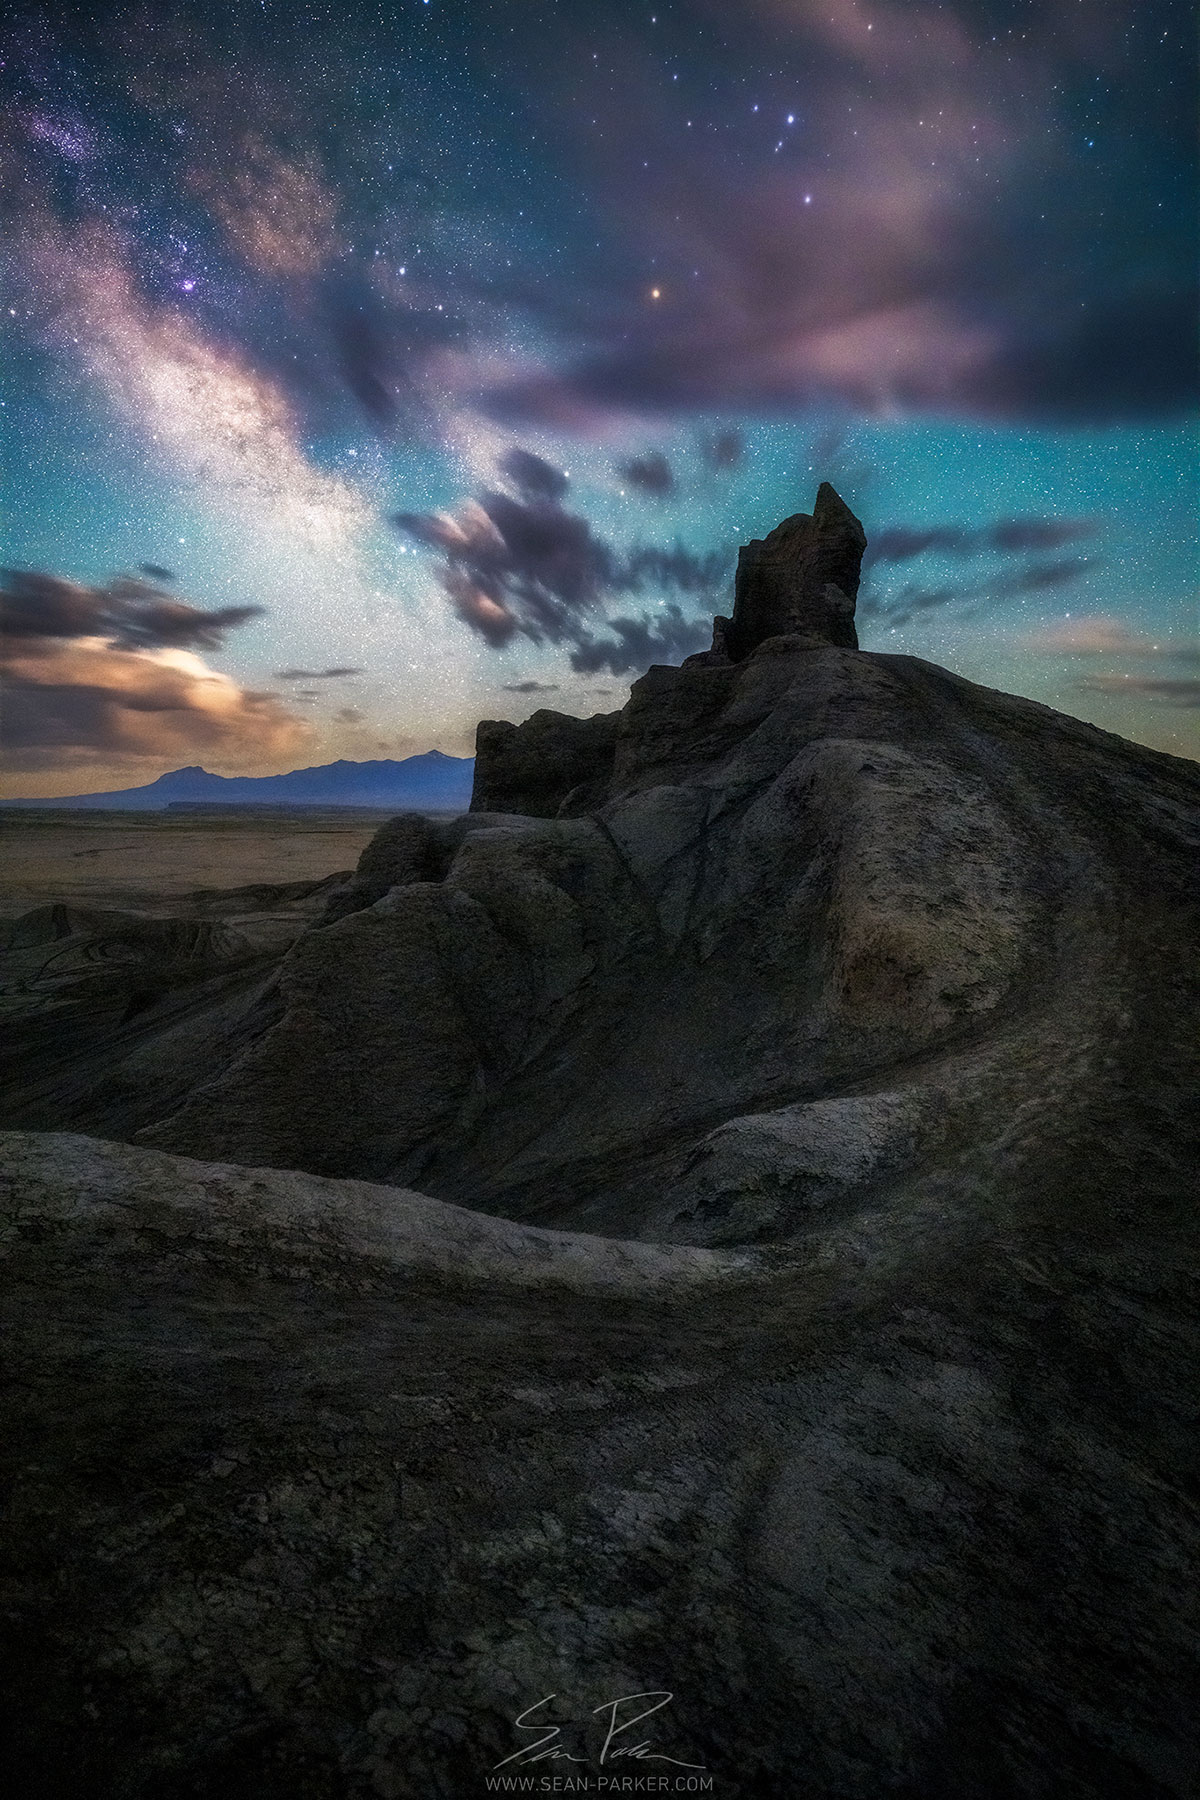 Hanksville Utah Desert night sky photography by Sean Parker